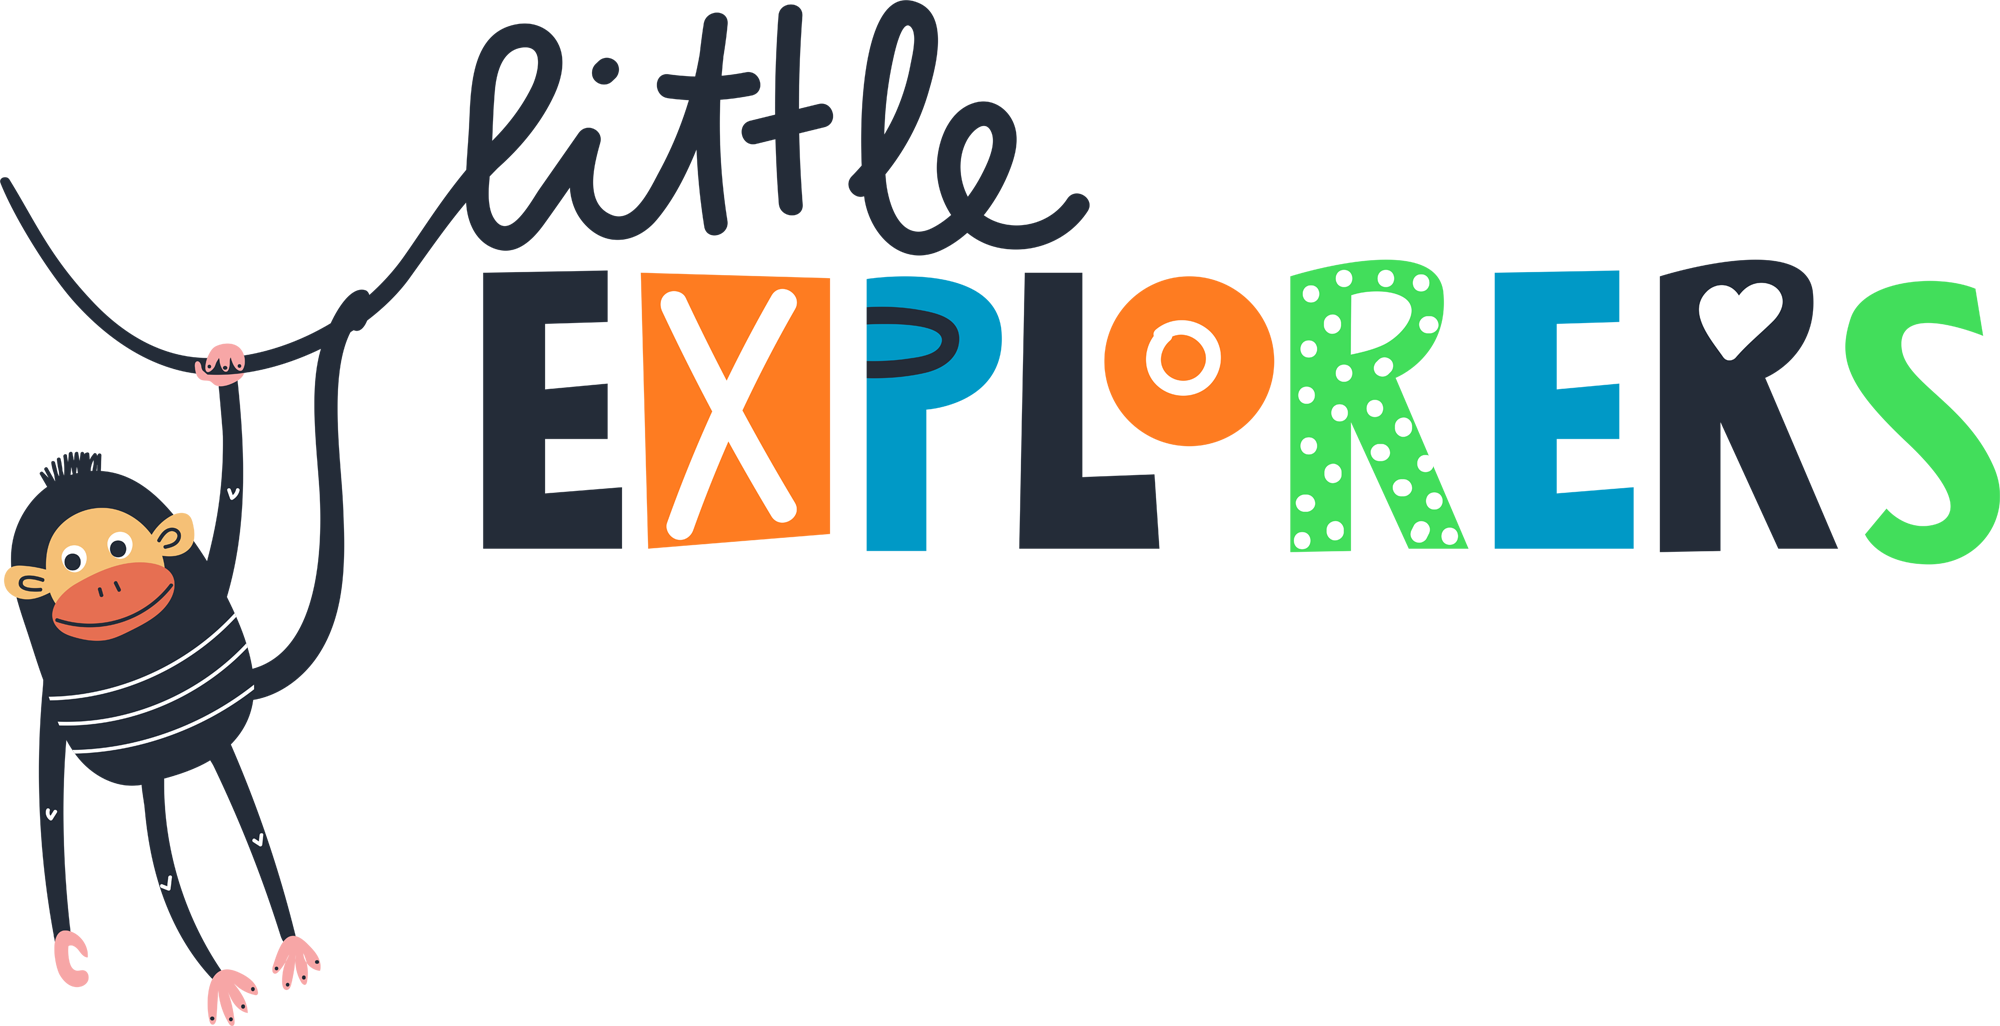 Little Explorers Academy LLC